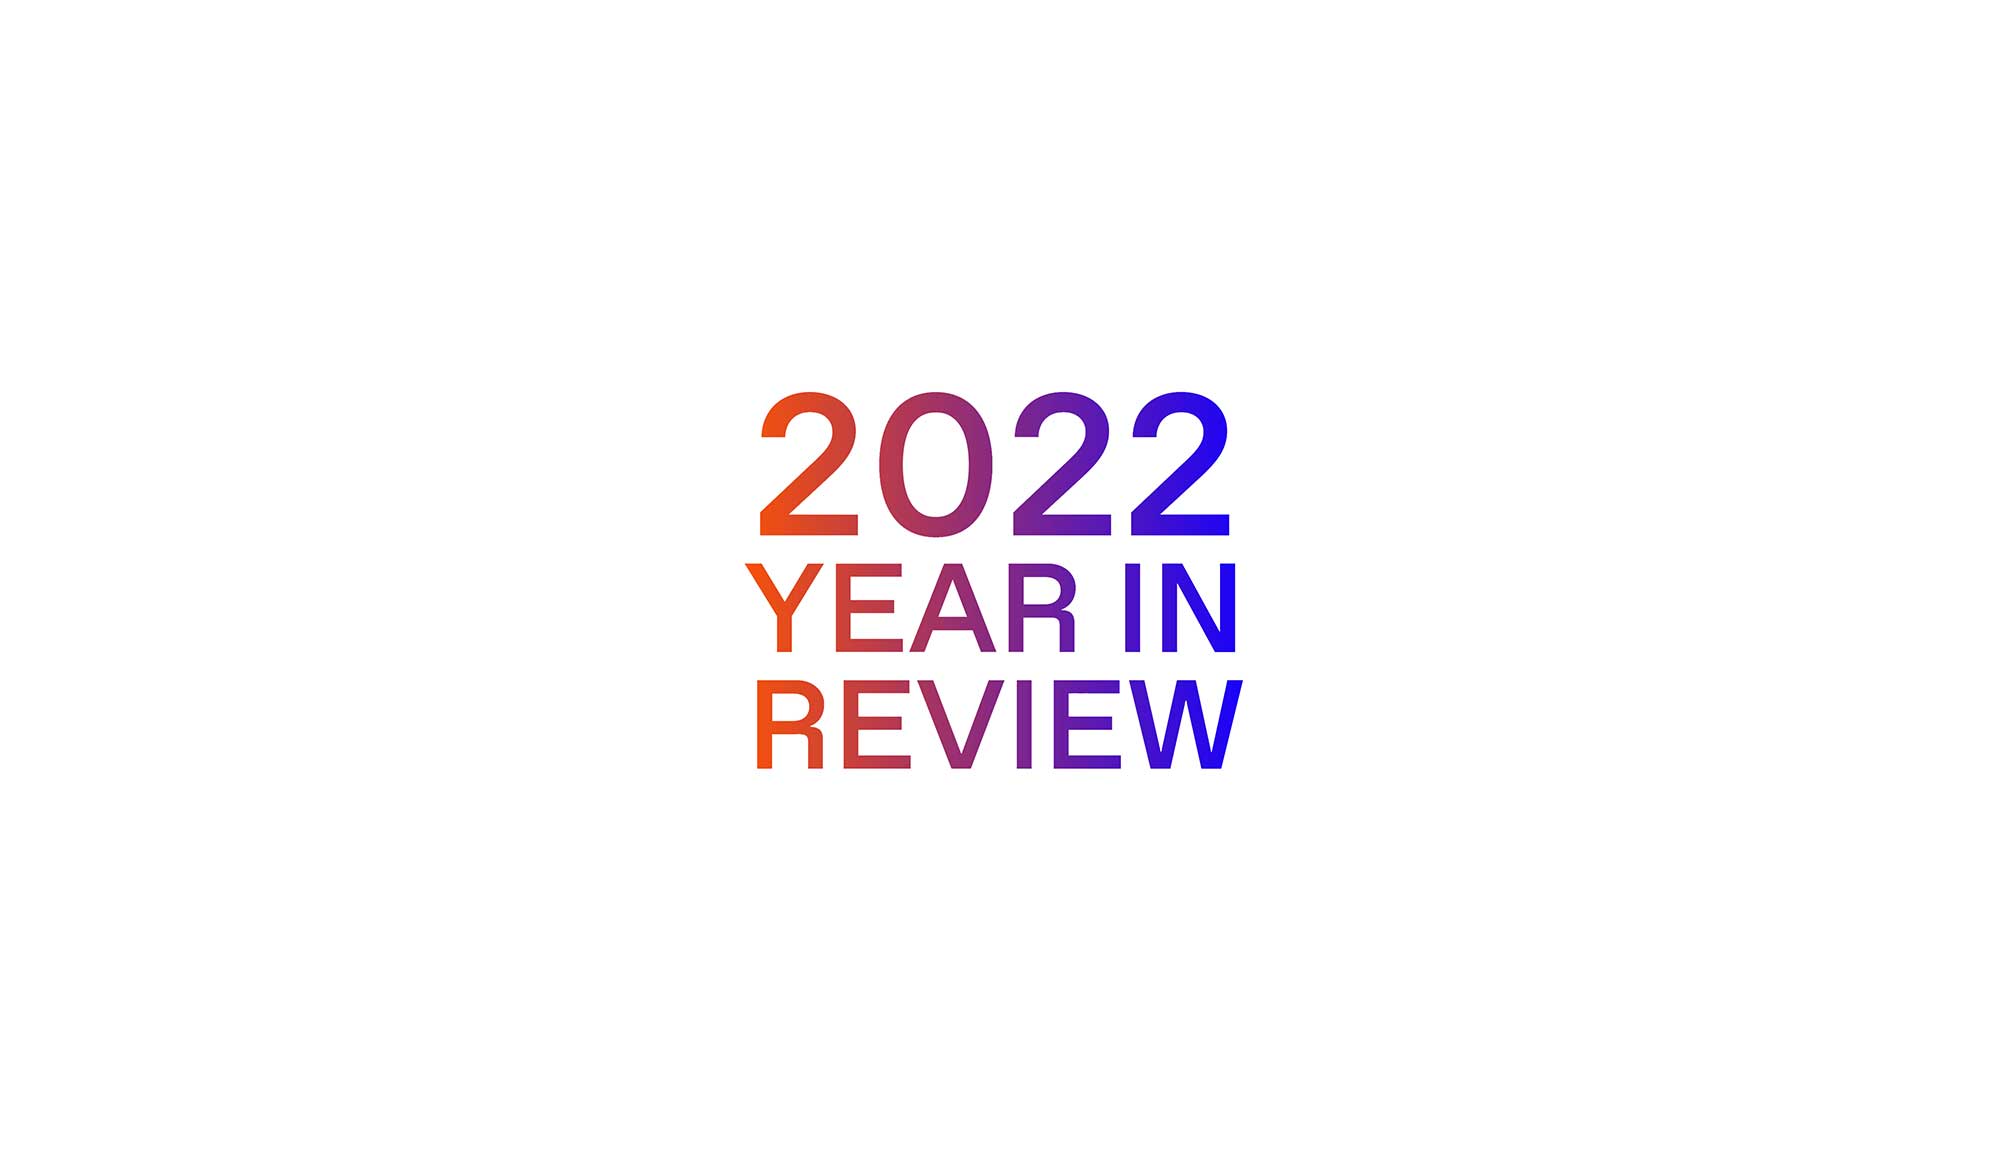 Zeleros' 2022 year in review